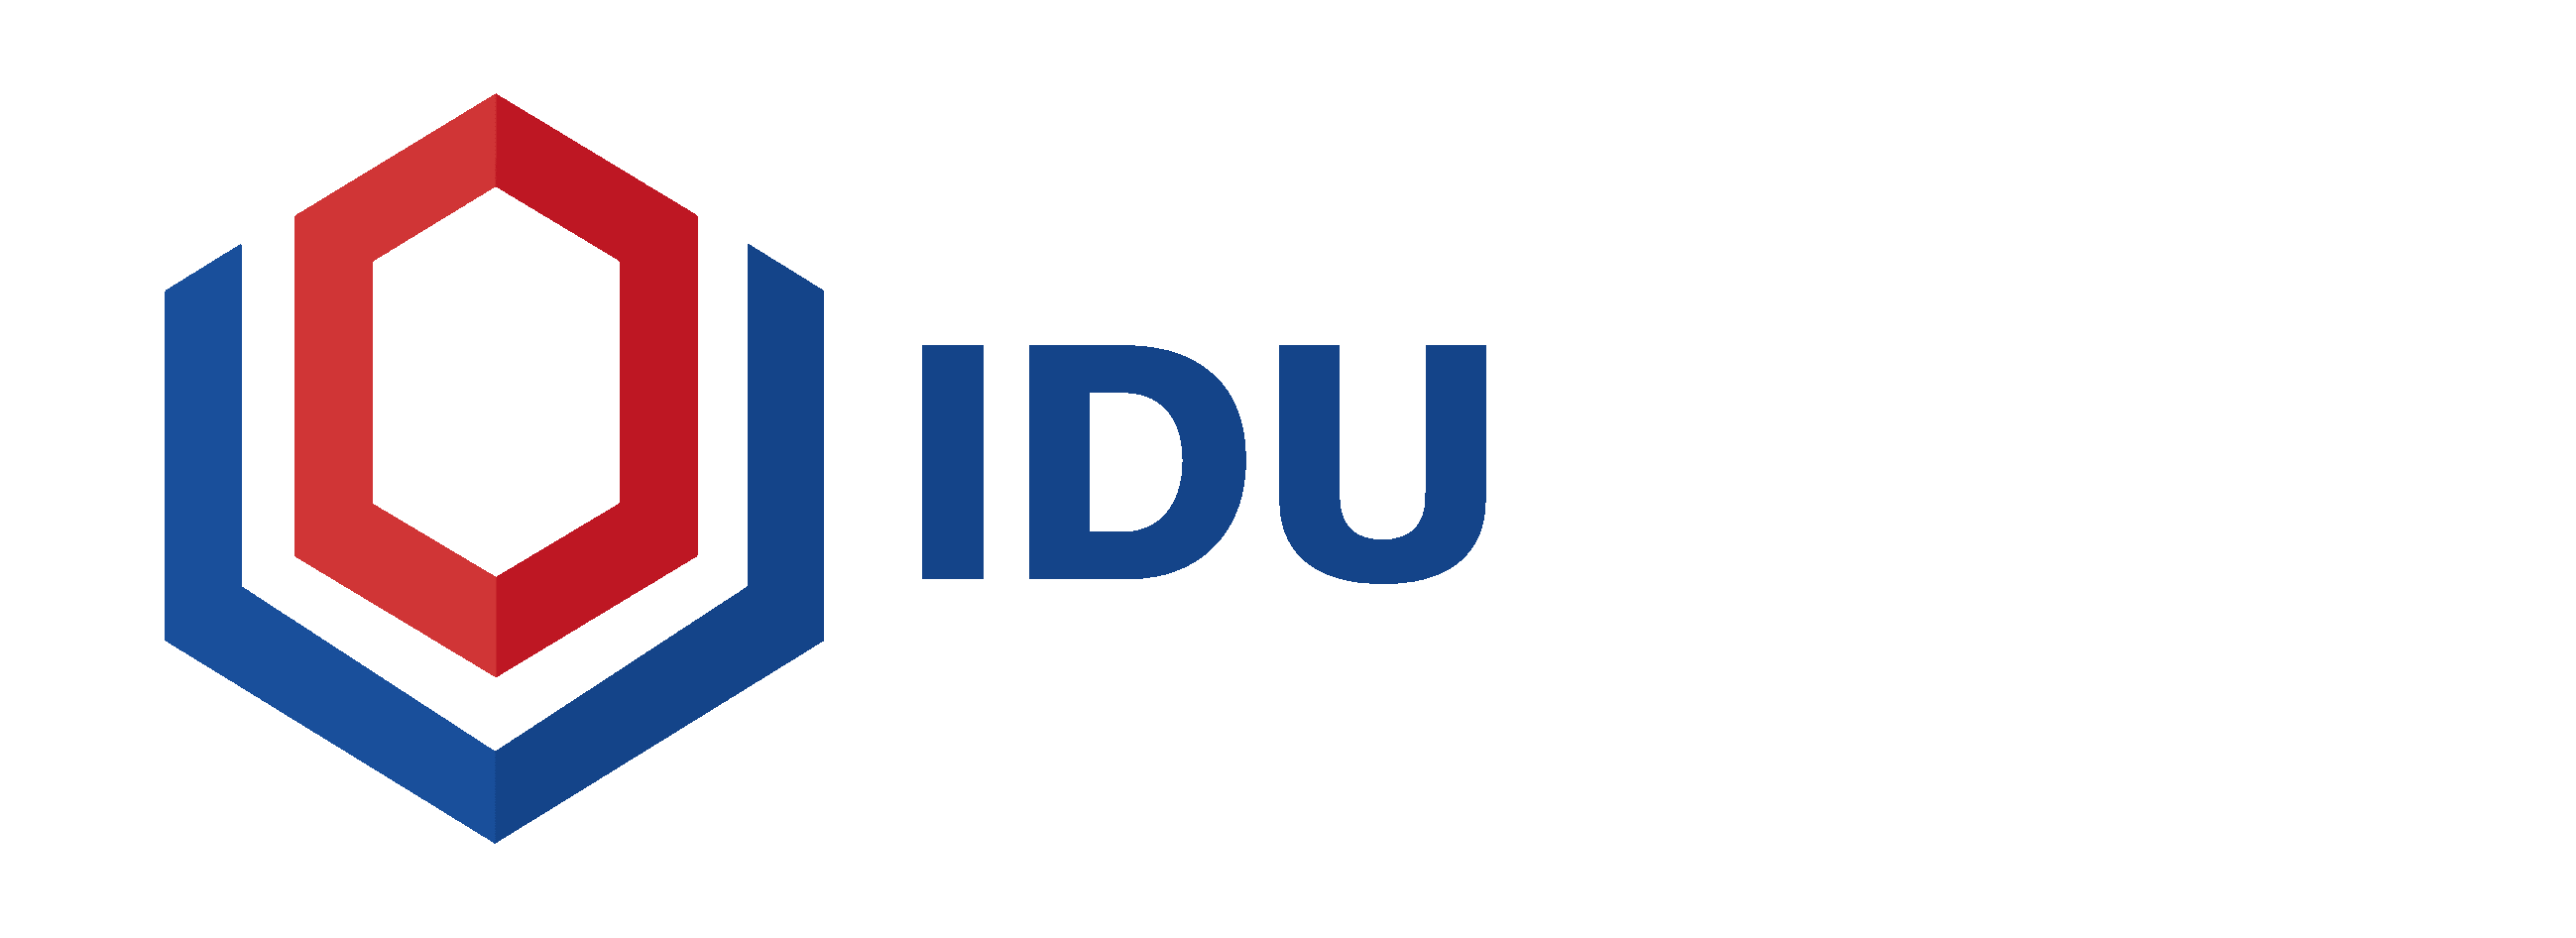 Loan Indemnification - Individual & Business Insurance | IDU